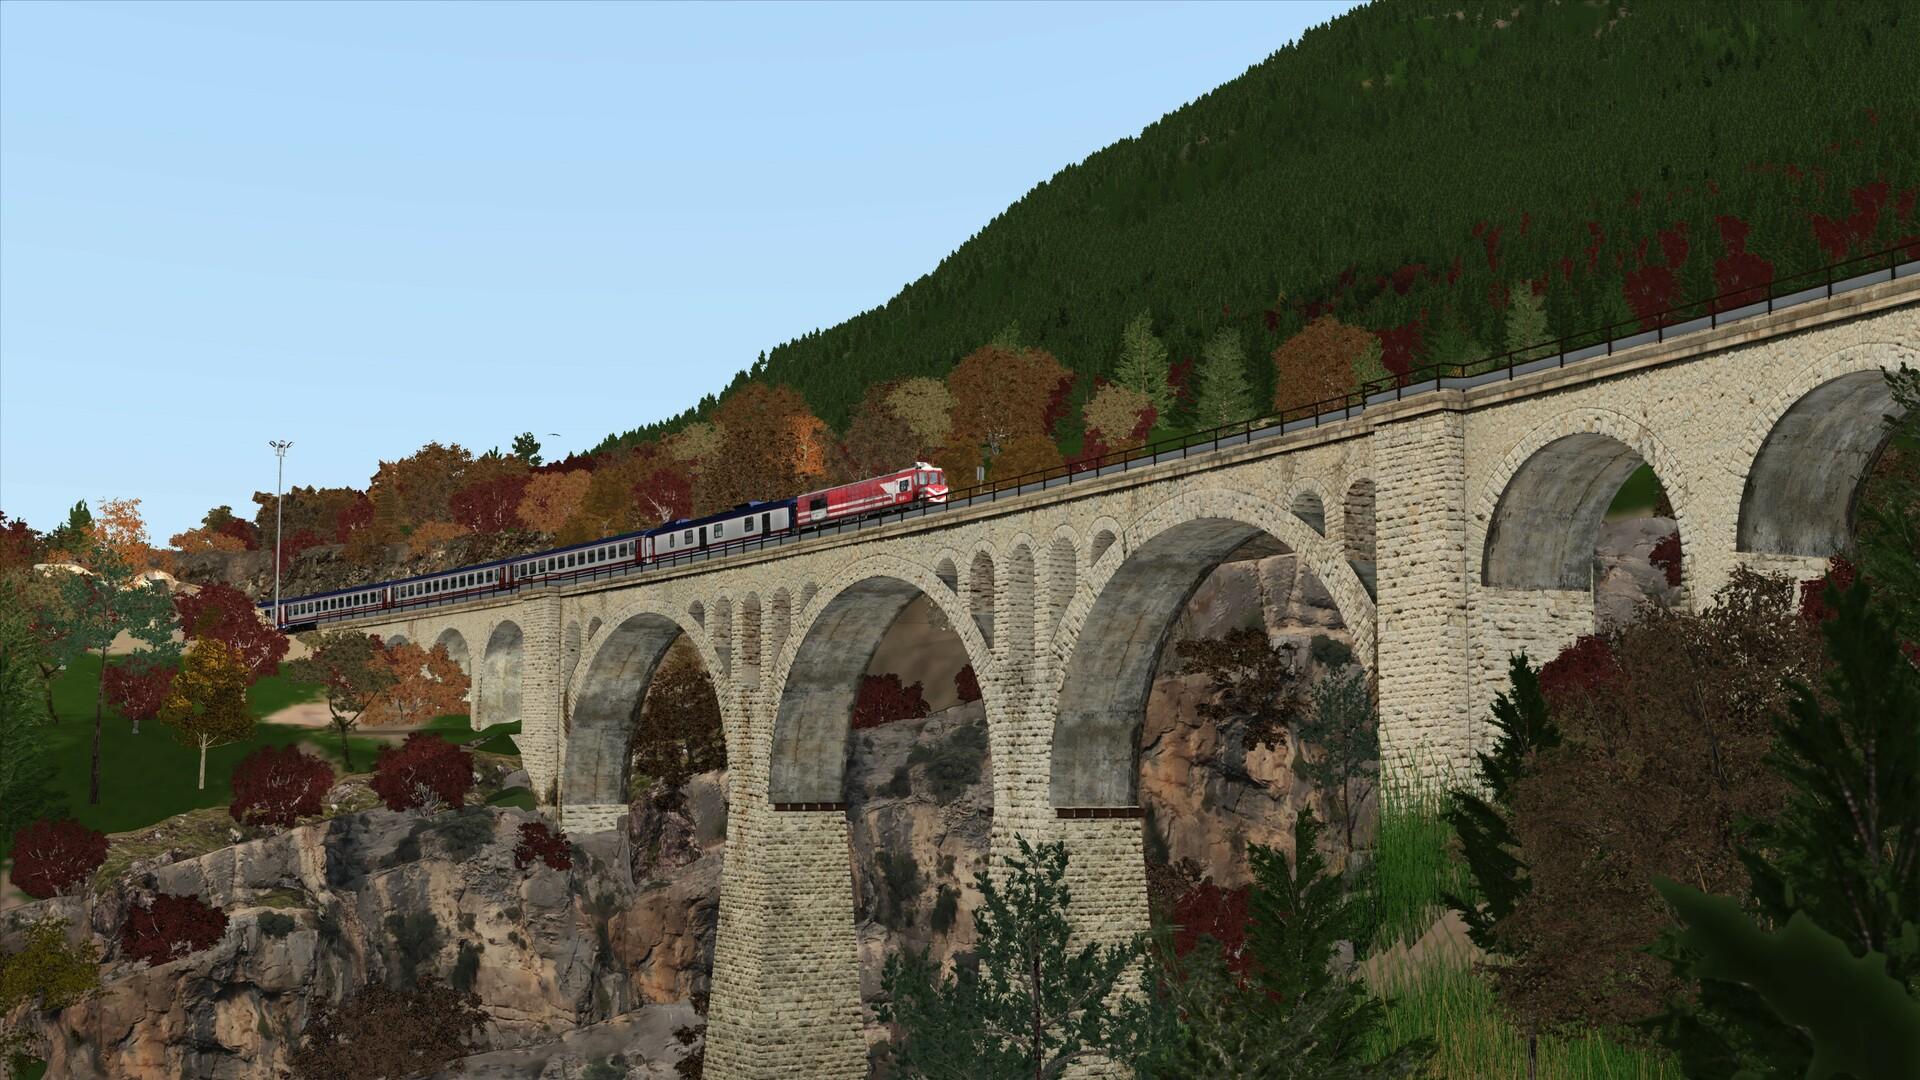 Train Simulator: Taurus Mountains: Ulukışla – Yenice Route Add-On